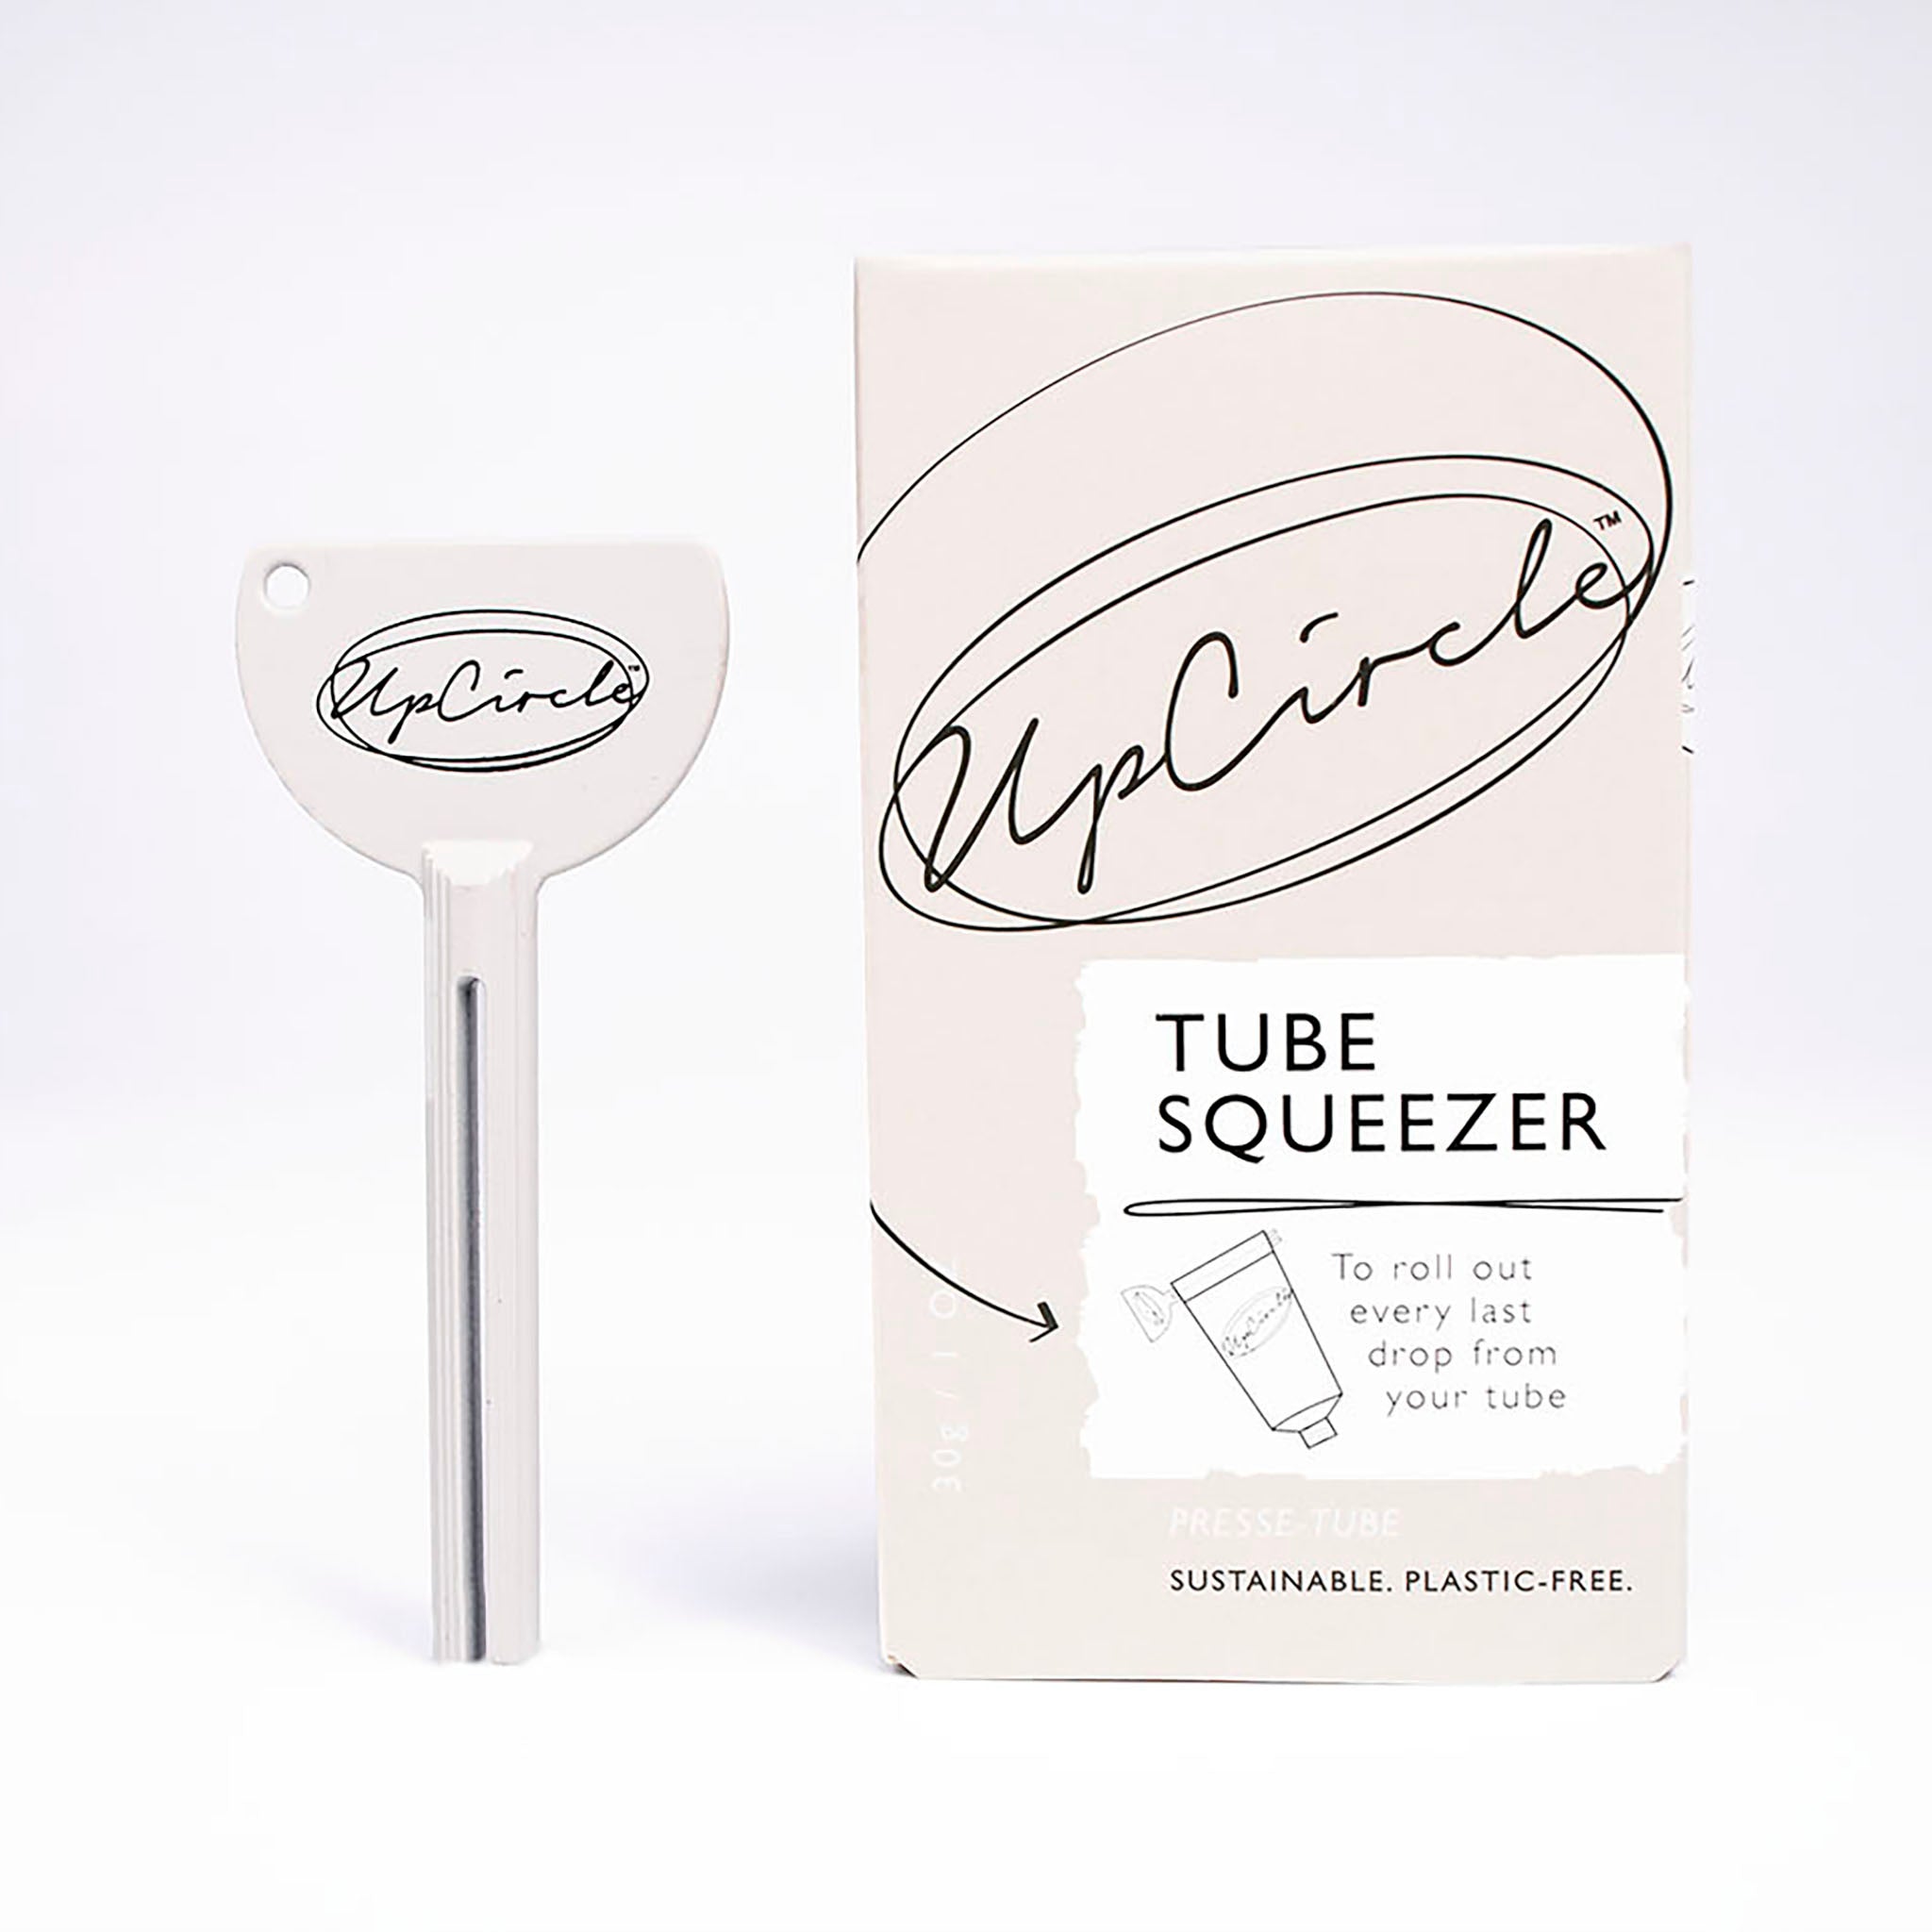 Tube Squeezer Key - mypure.co.uk